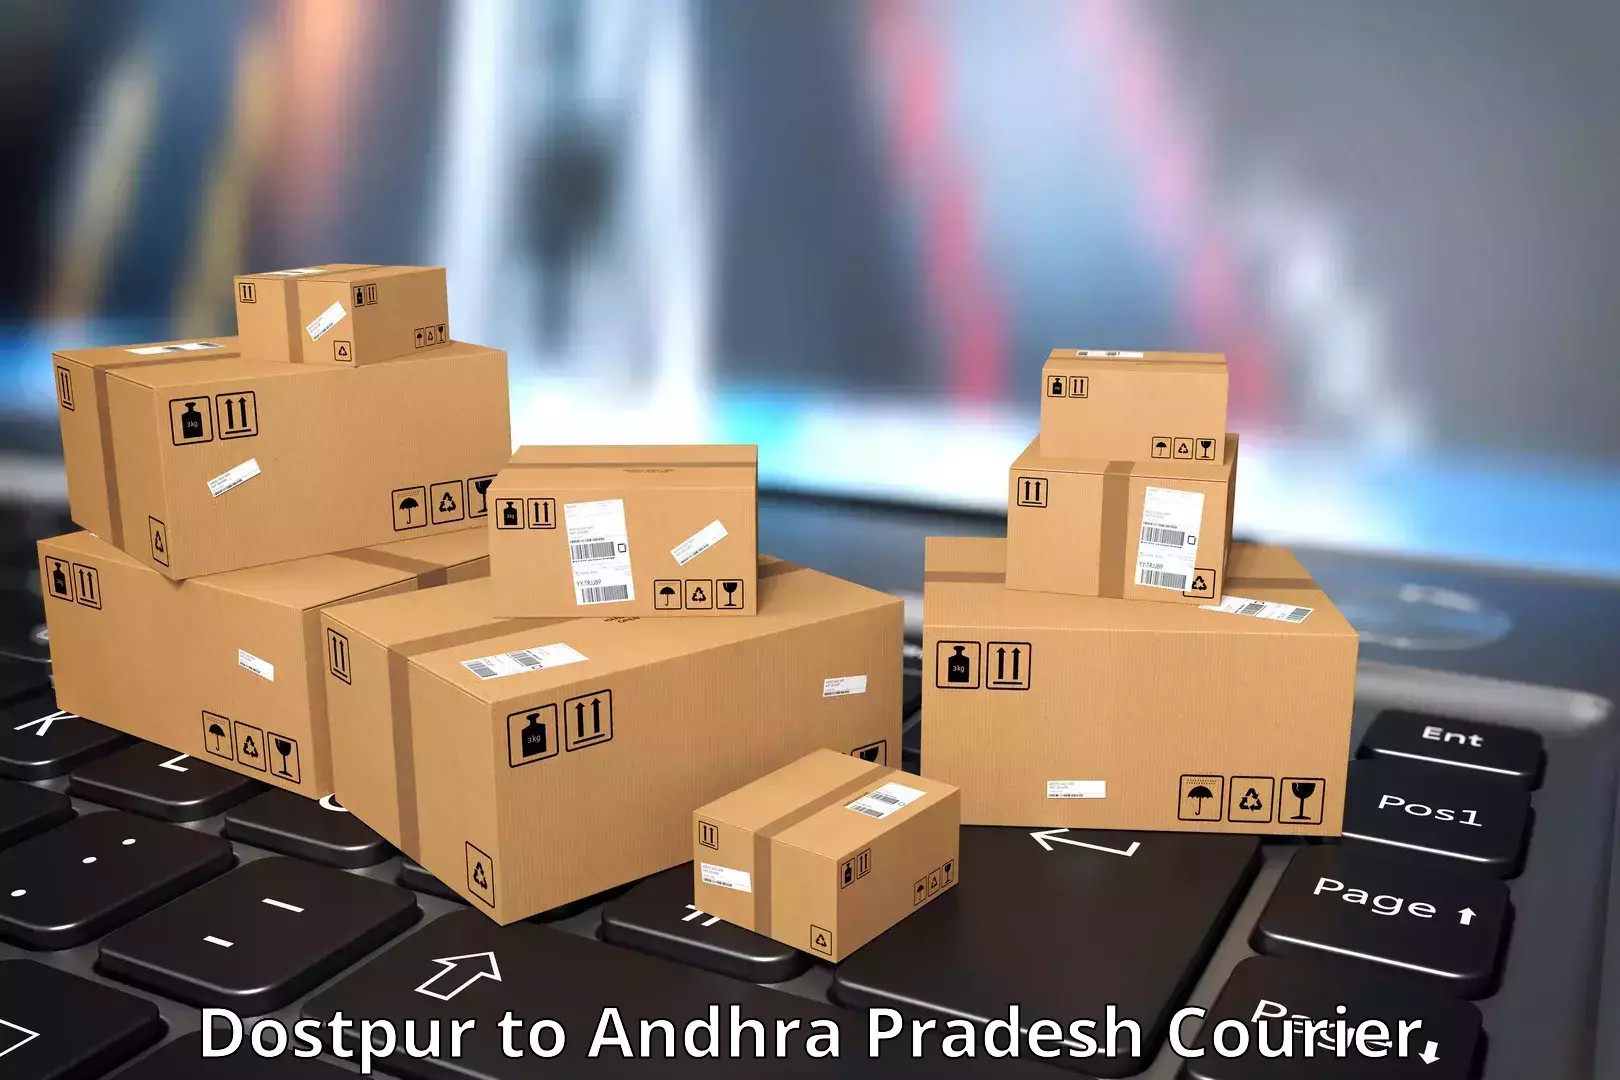 Doorstep delivery service Dostpur to Andhra Pradesh